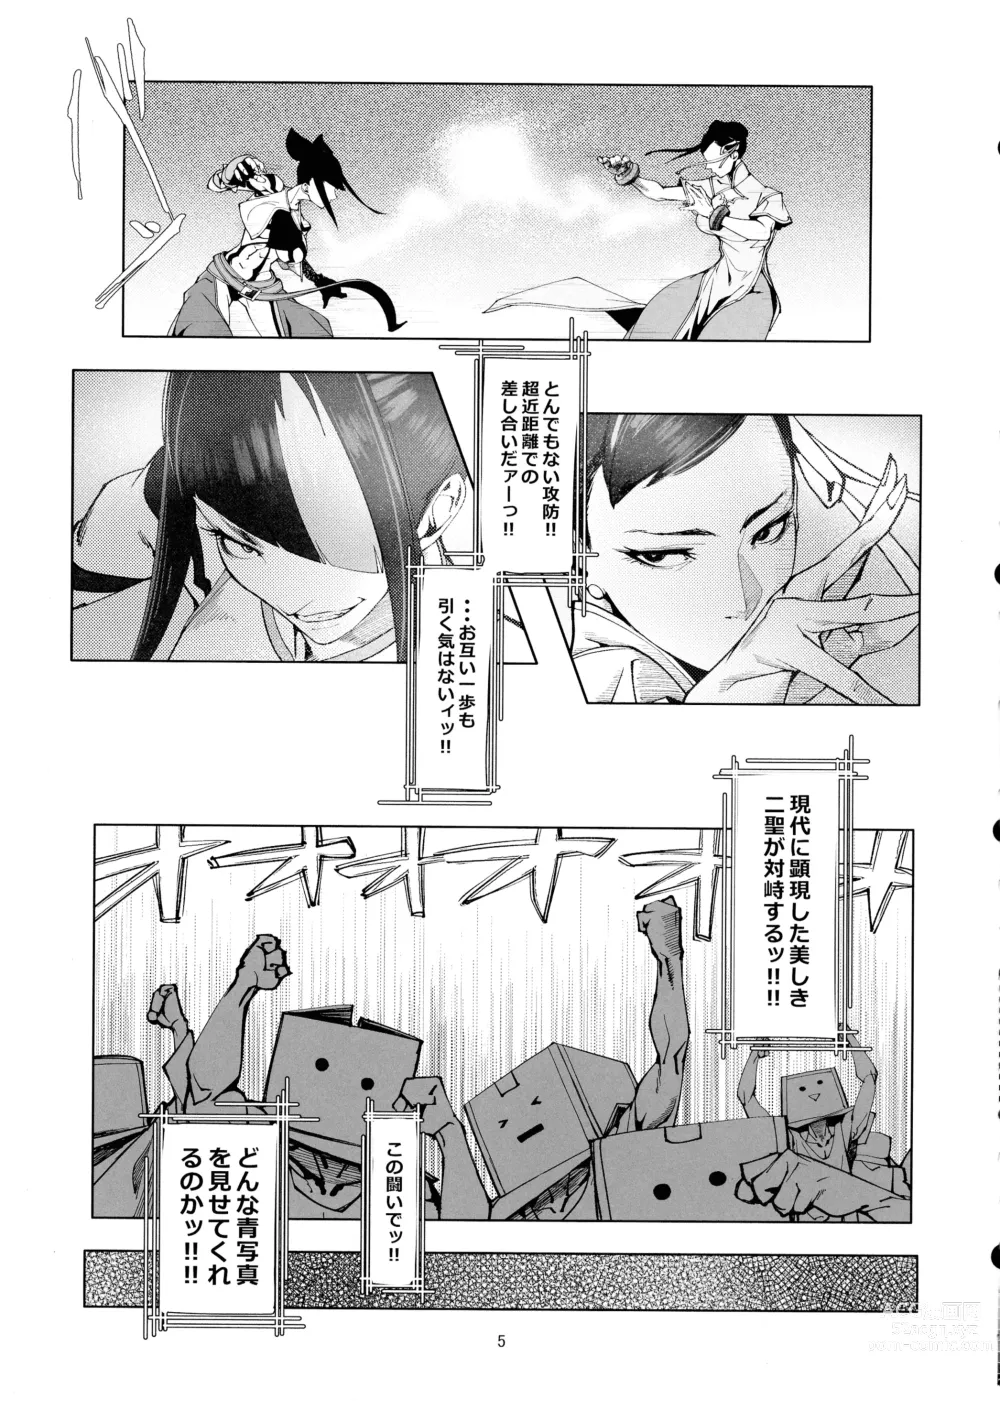 Page 4 of doujinshi Backstab